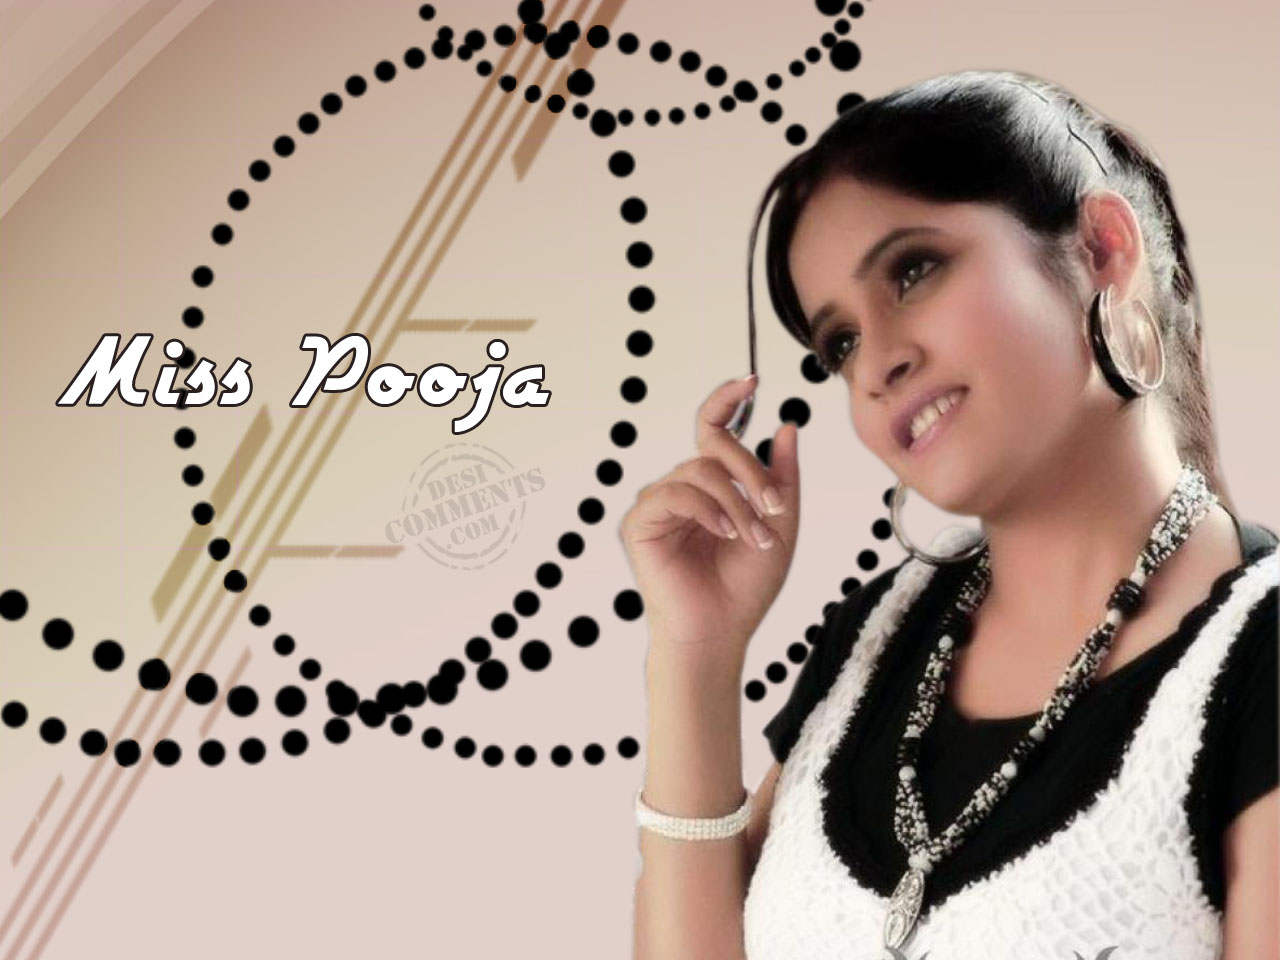 Singer Miss Pooja Image